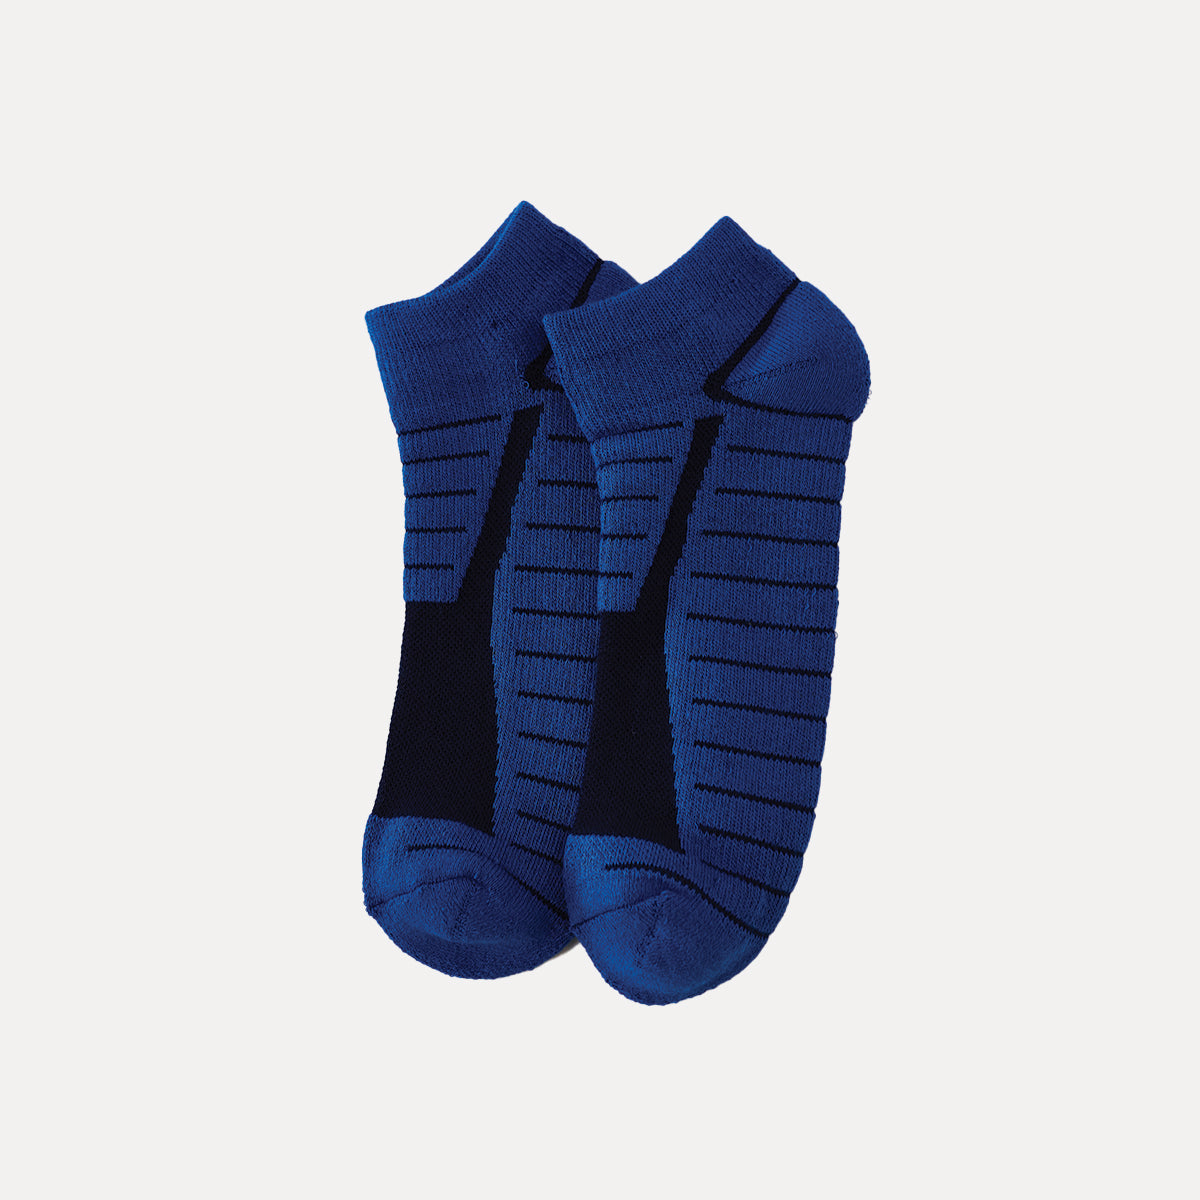 SOCKIC | Ankle Cushion Sock - Blue/Black